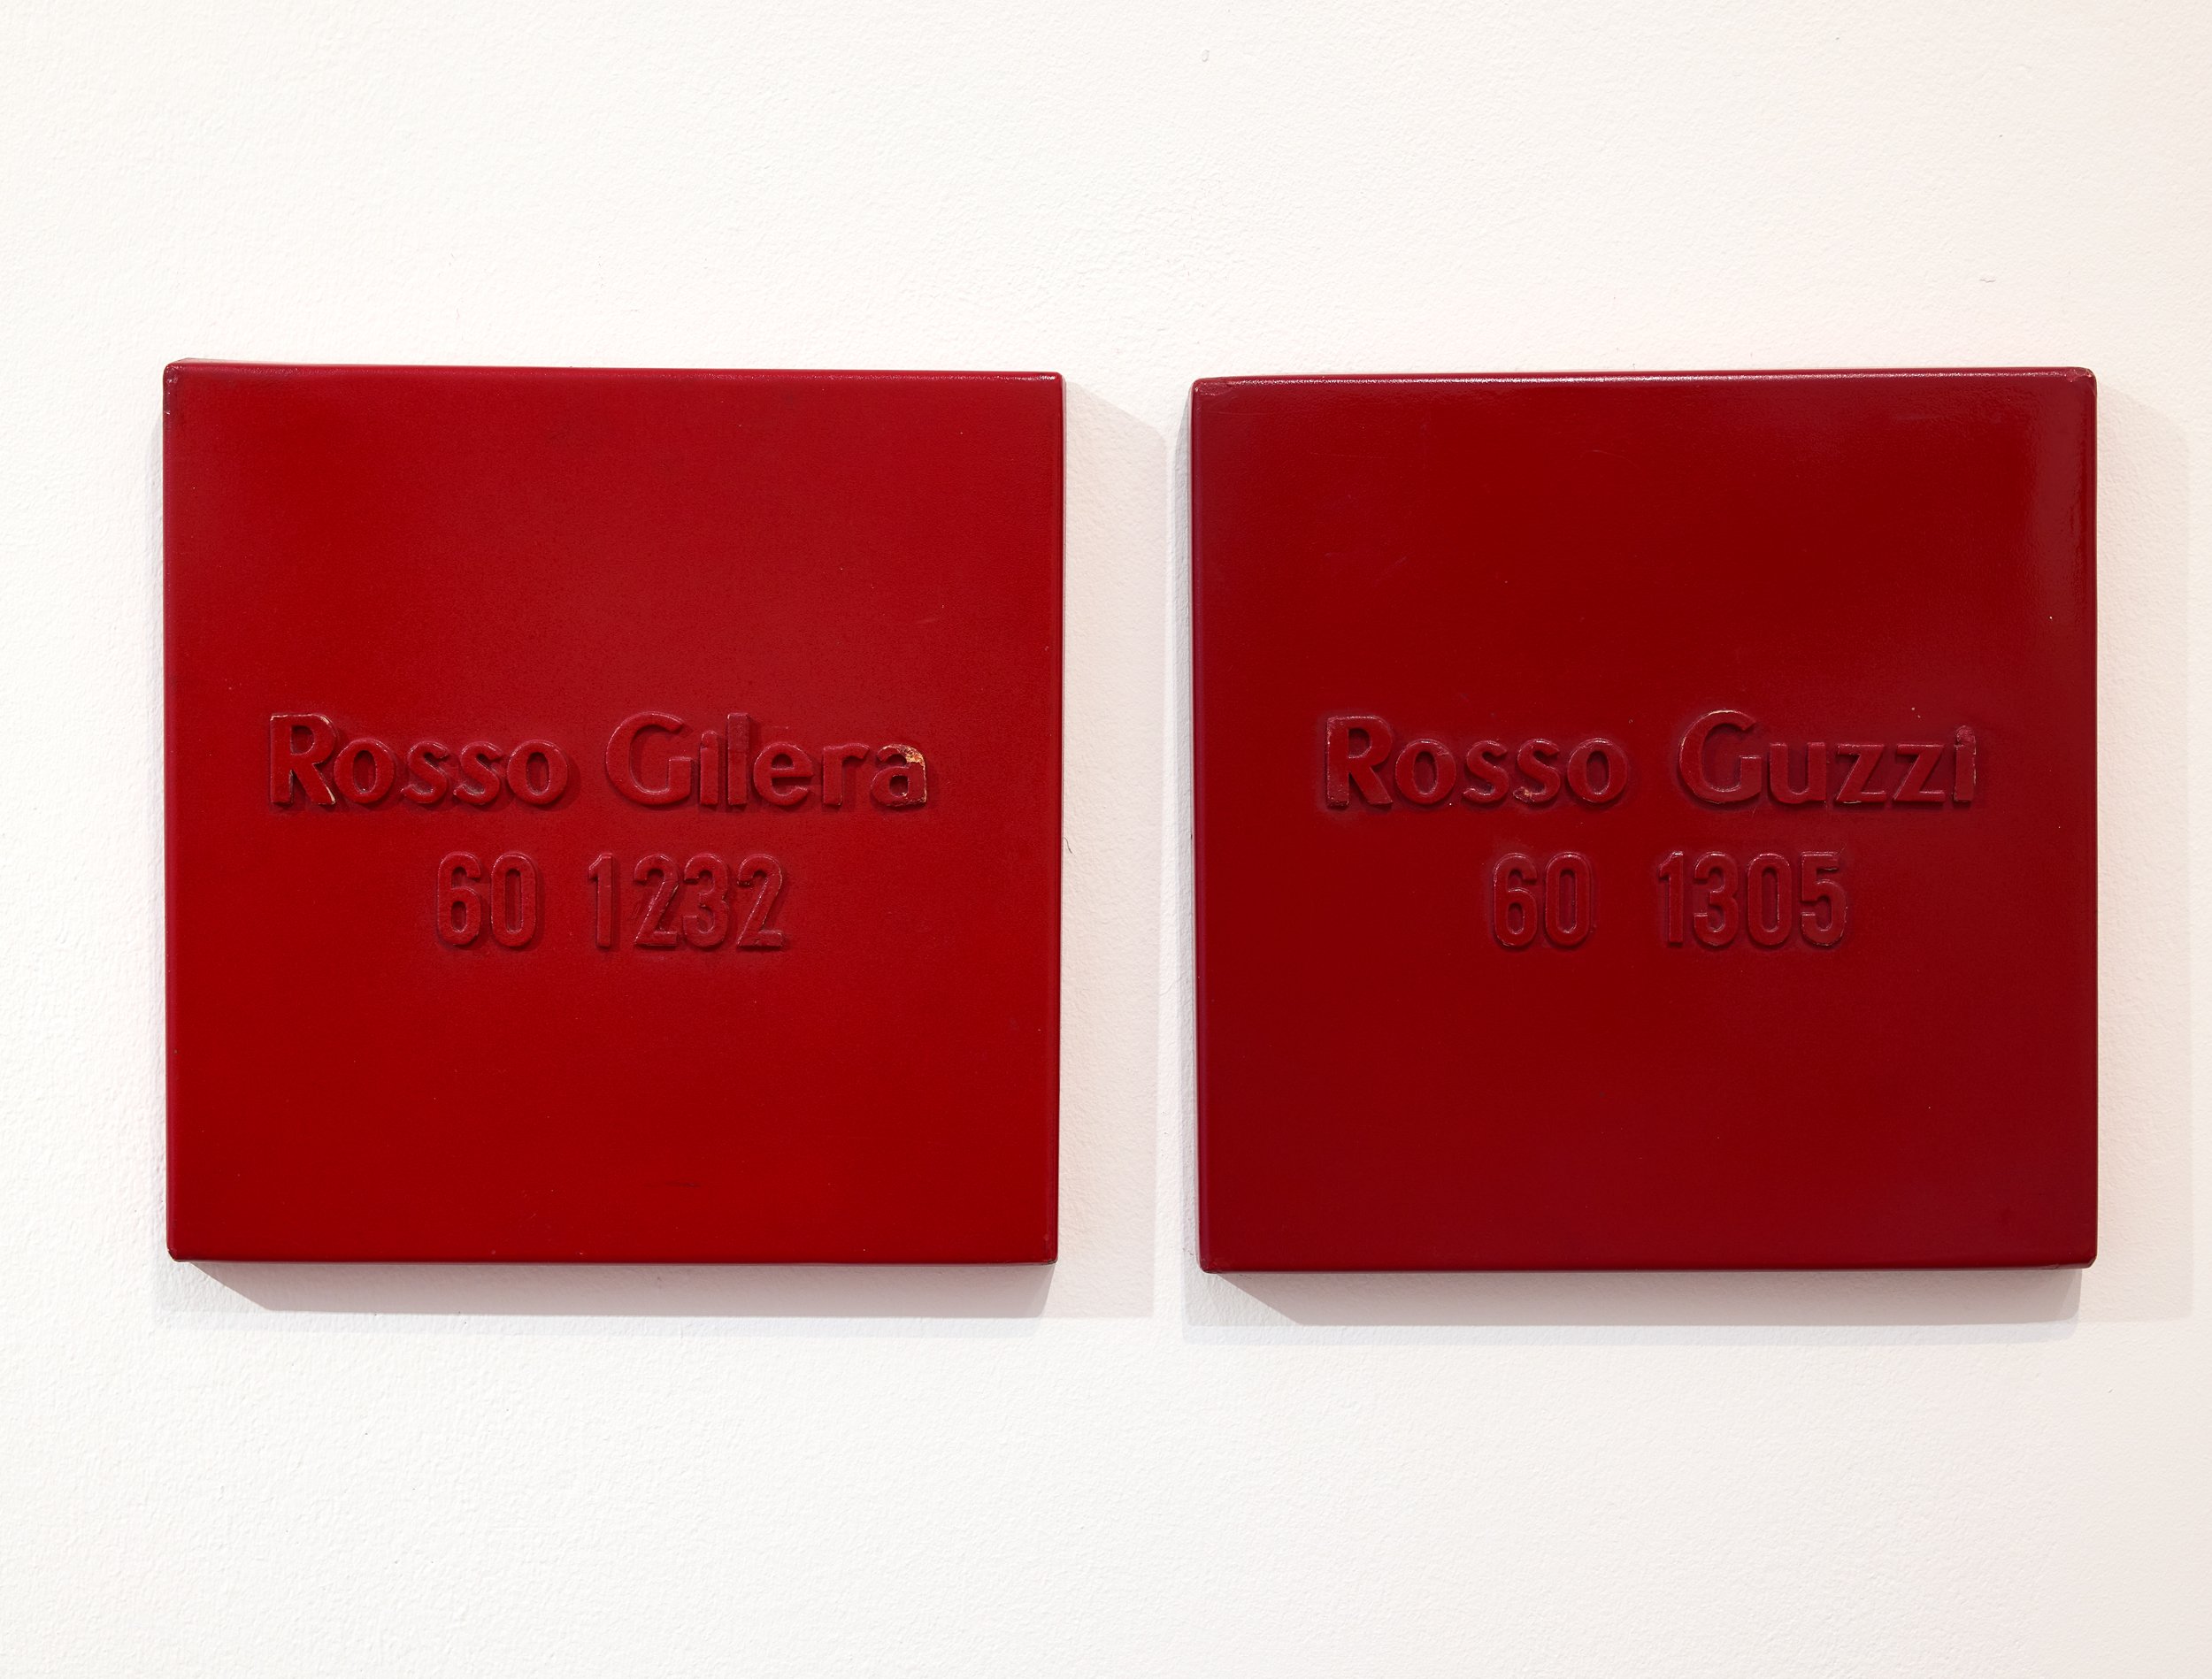 Alighiero Boetti, Rosso Guzzi Rosso Gilera, 1971, industrial varnish on cork letters on metal, 25 x 25 cm (each), ABo302446